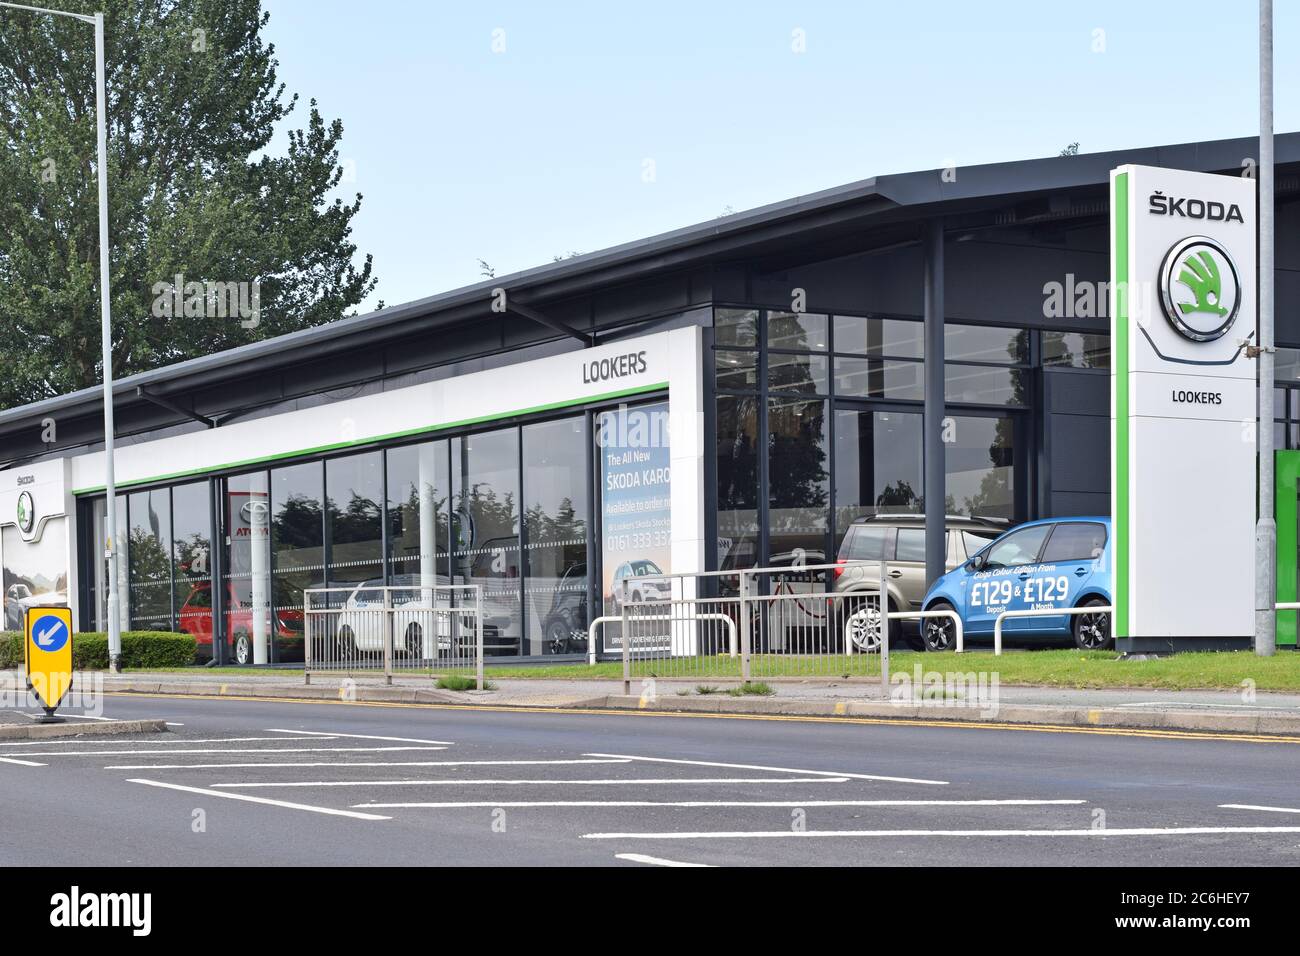 Skoda car dealership in Stockport, Greater Manchester, UK Stock Photo